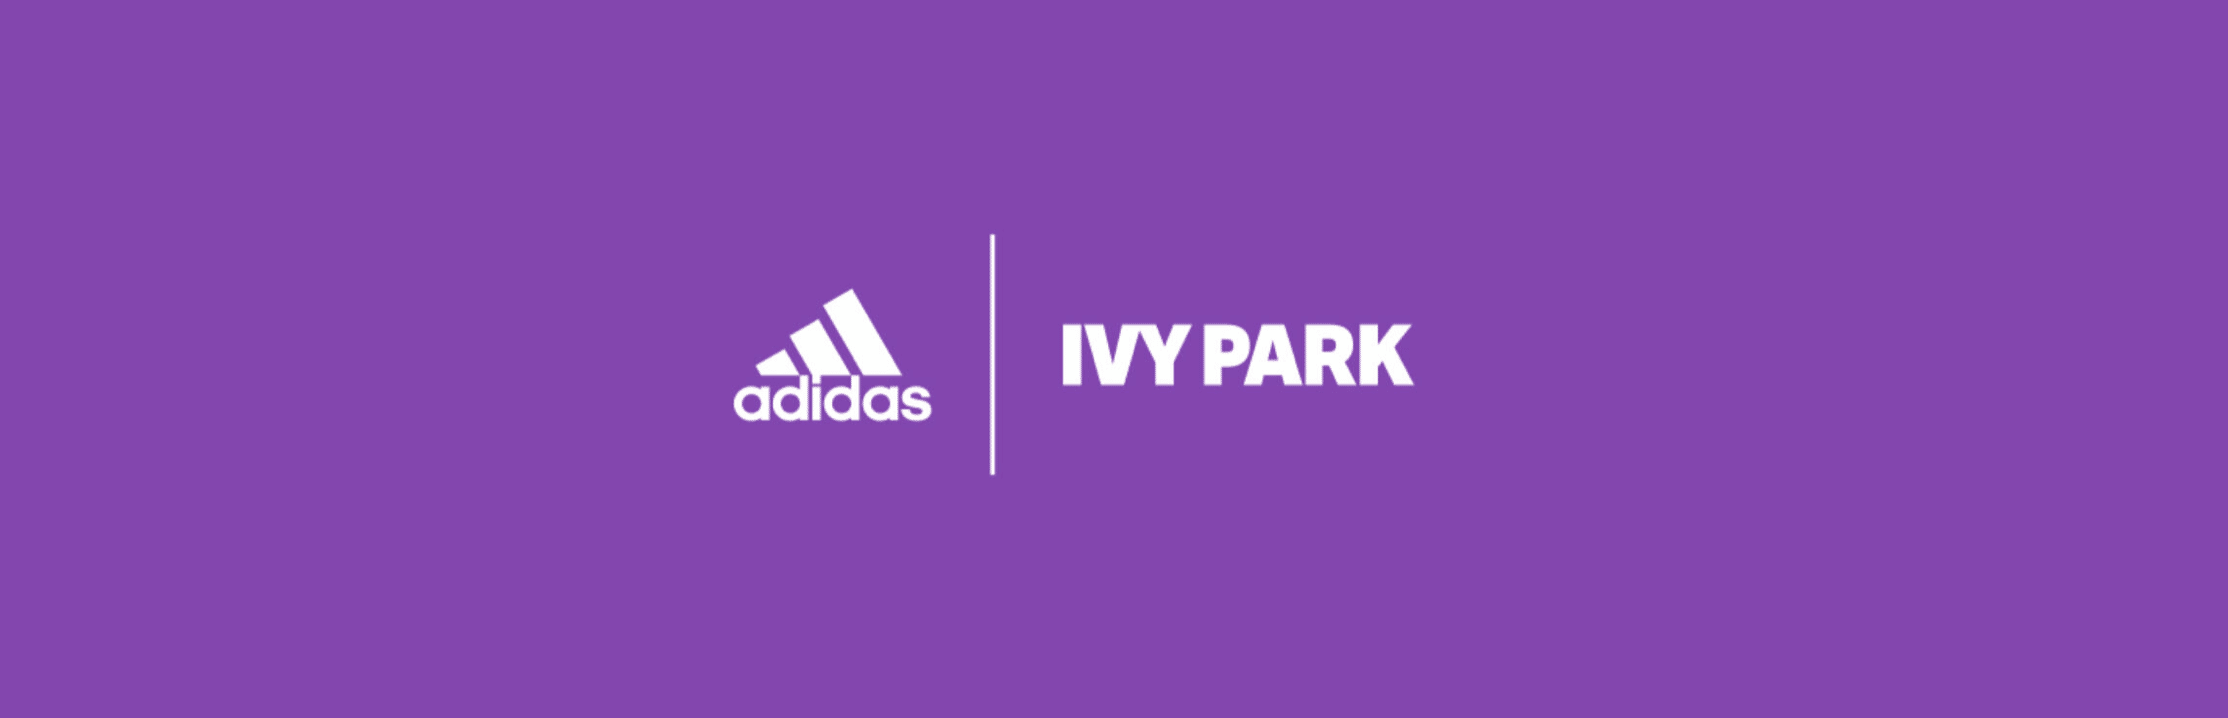 Adidas Ivy Park